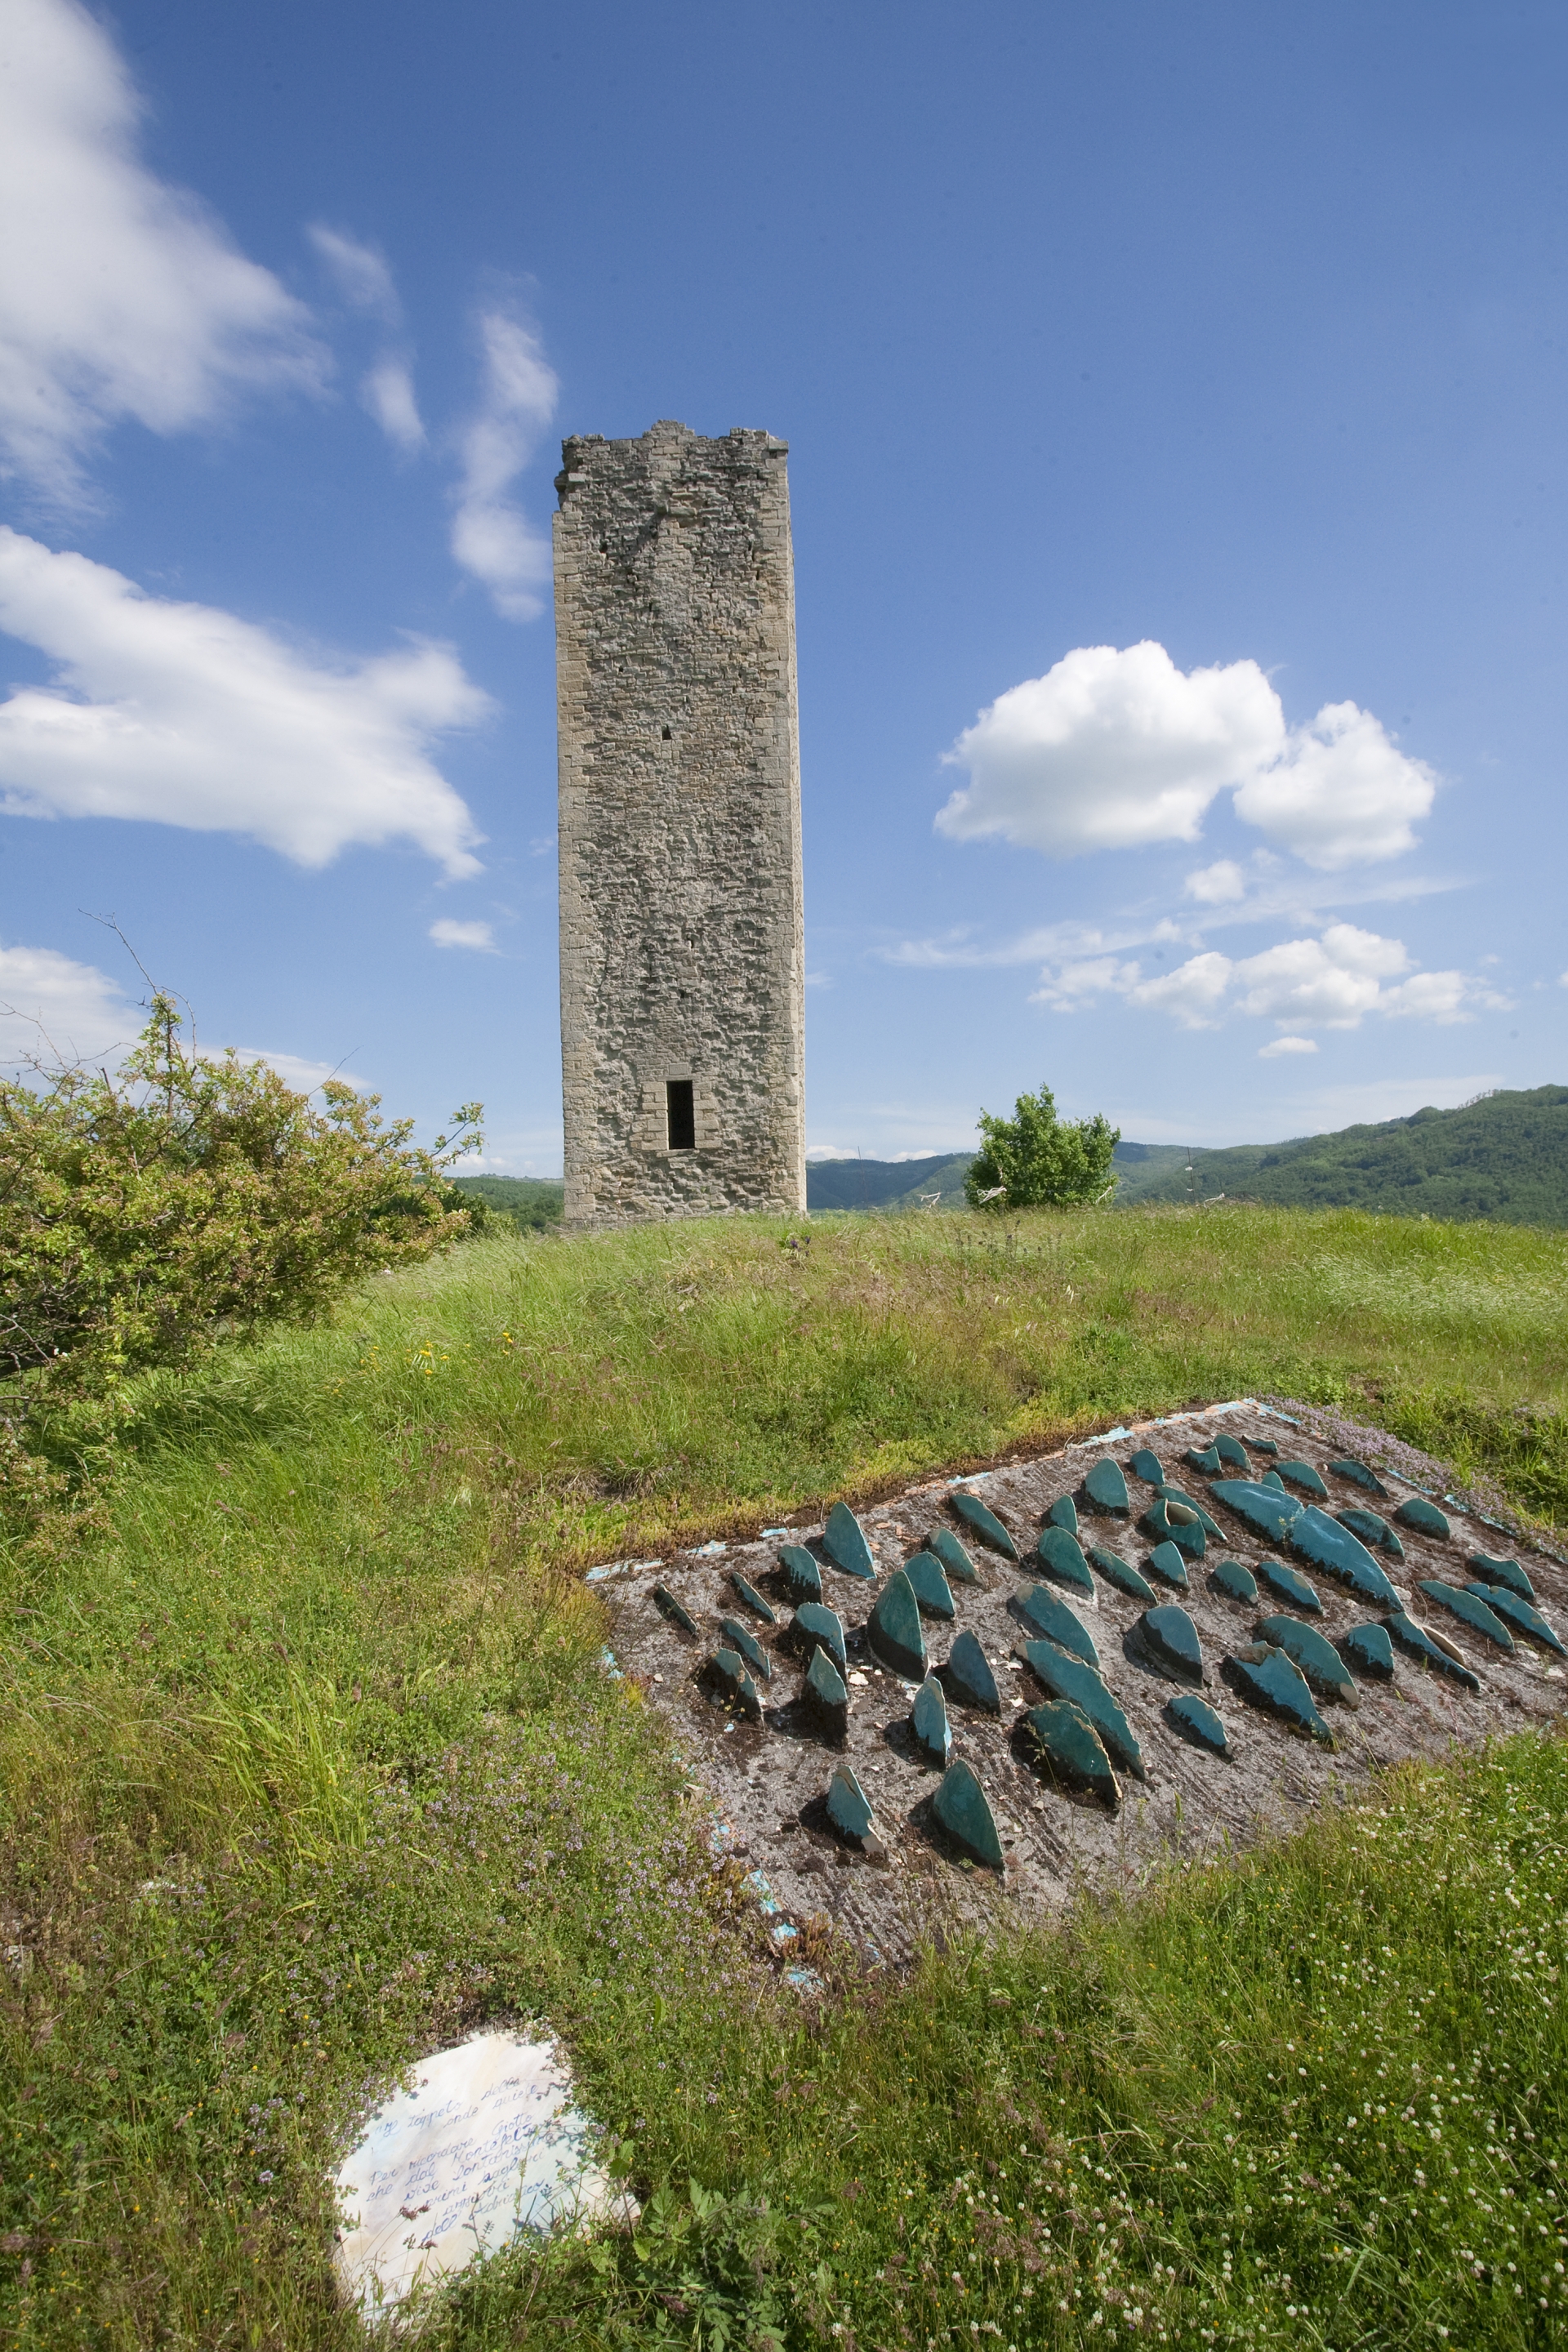 Pennabilli | torre di Bascio photos de Paritani